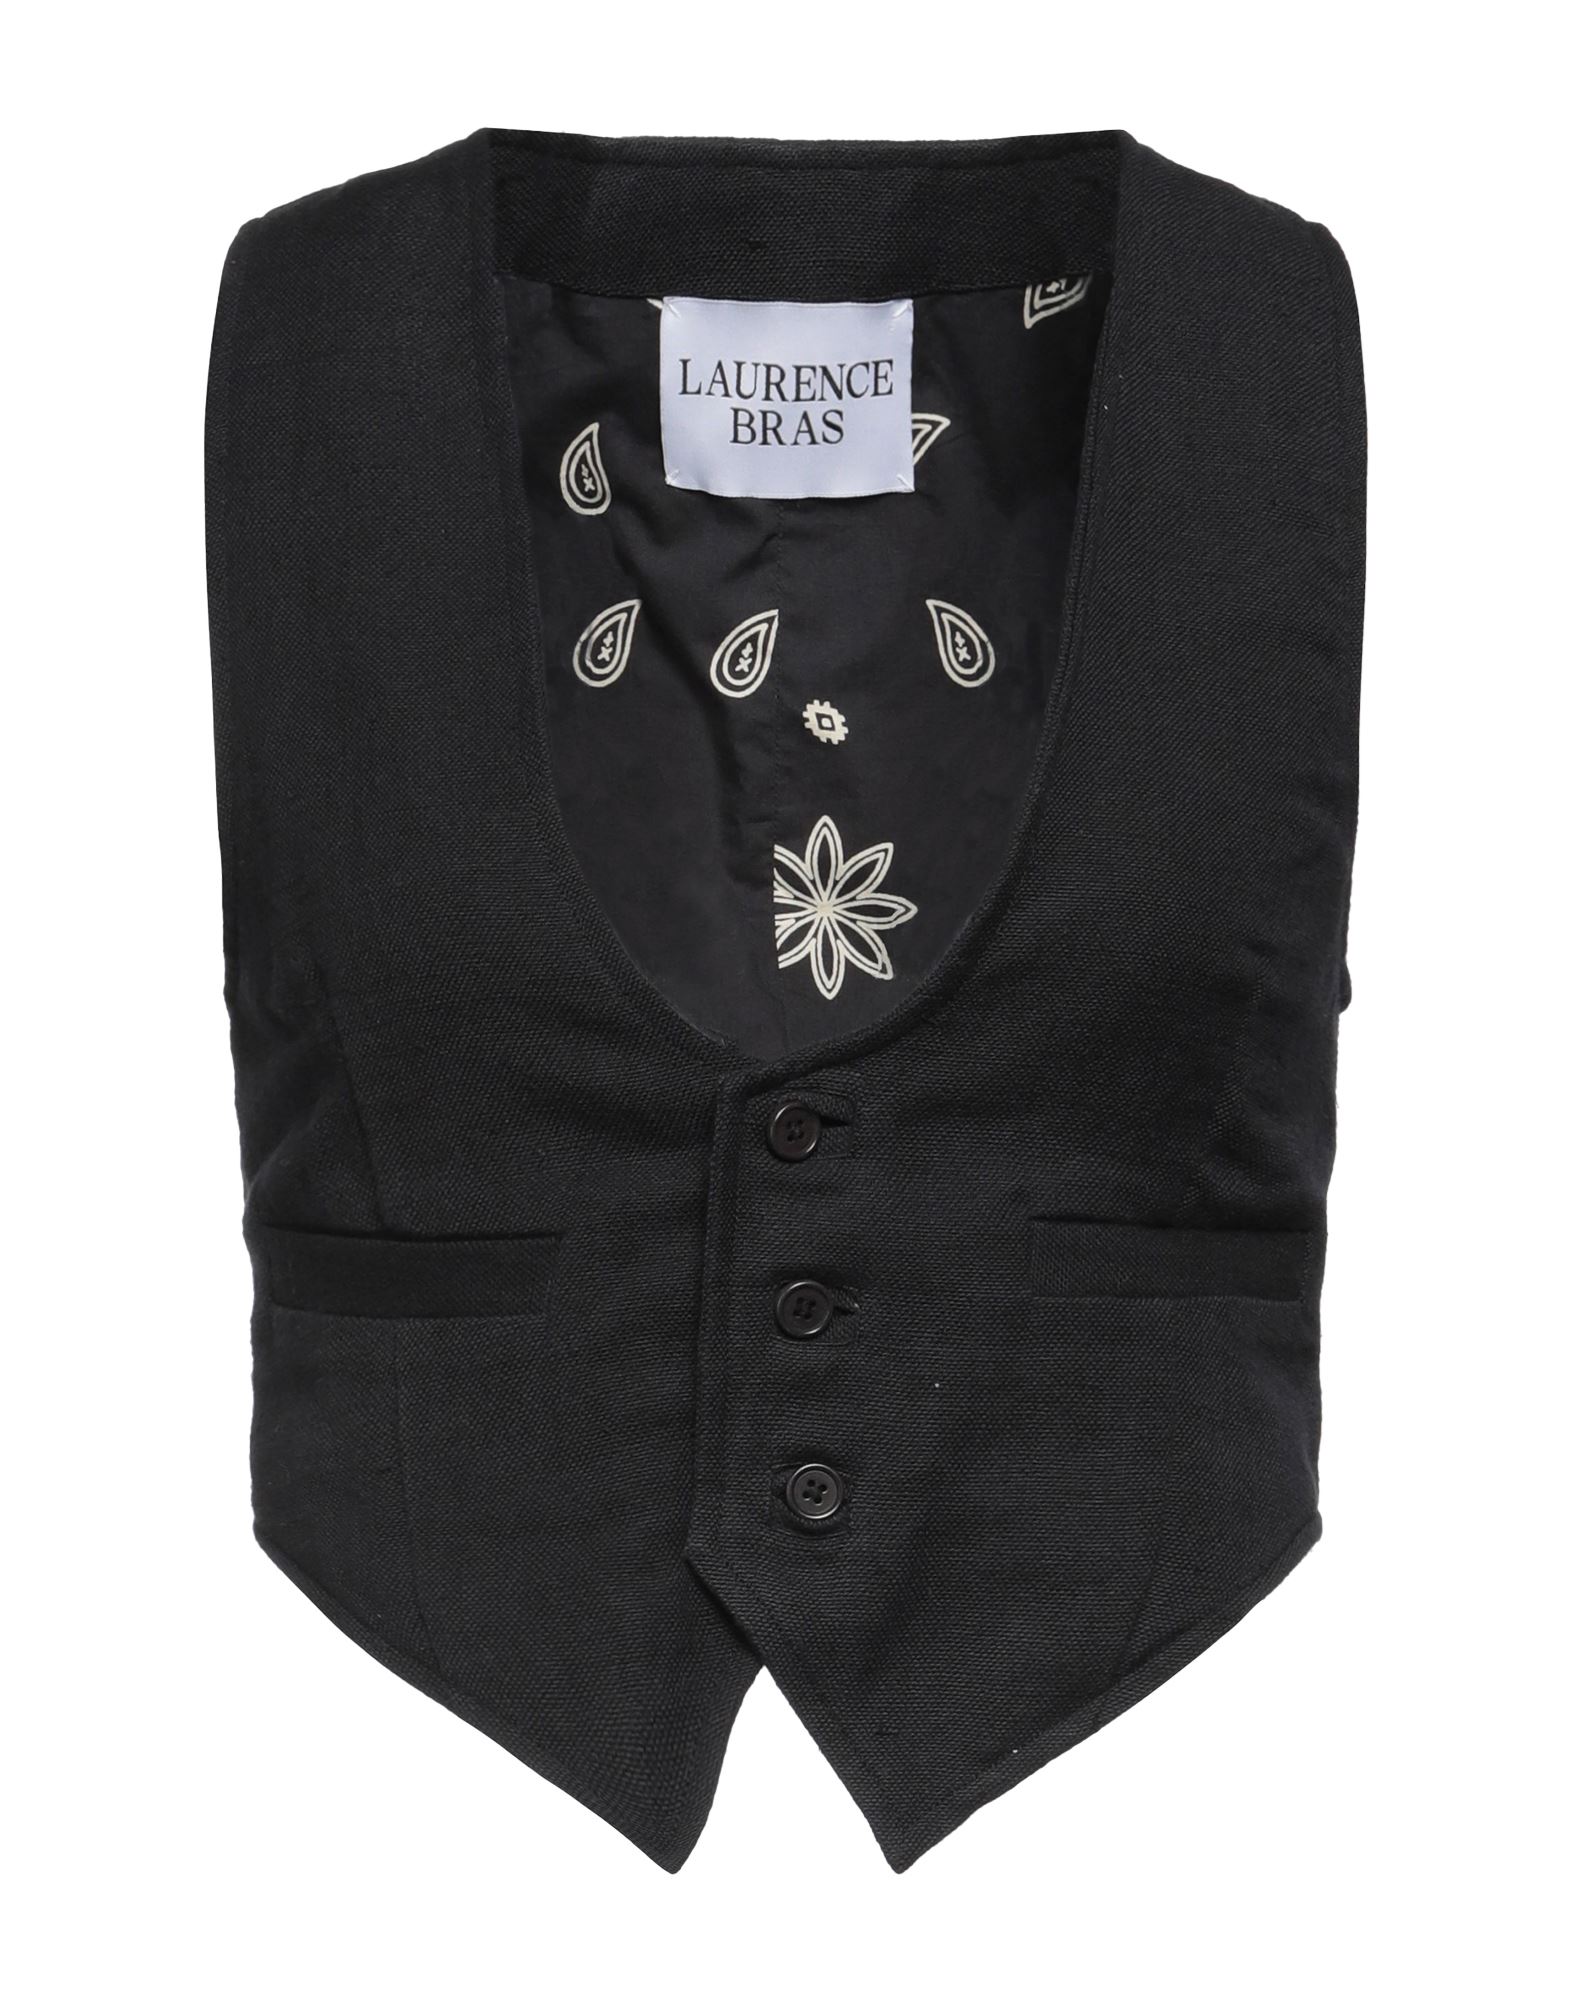 Laurence Bras Vest - Black Jackets, Clothing - WLCBS20470